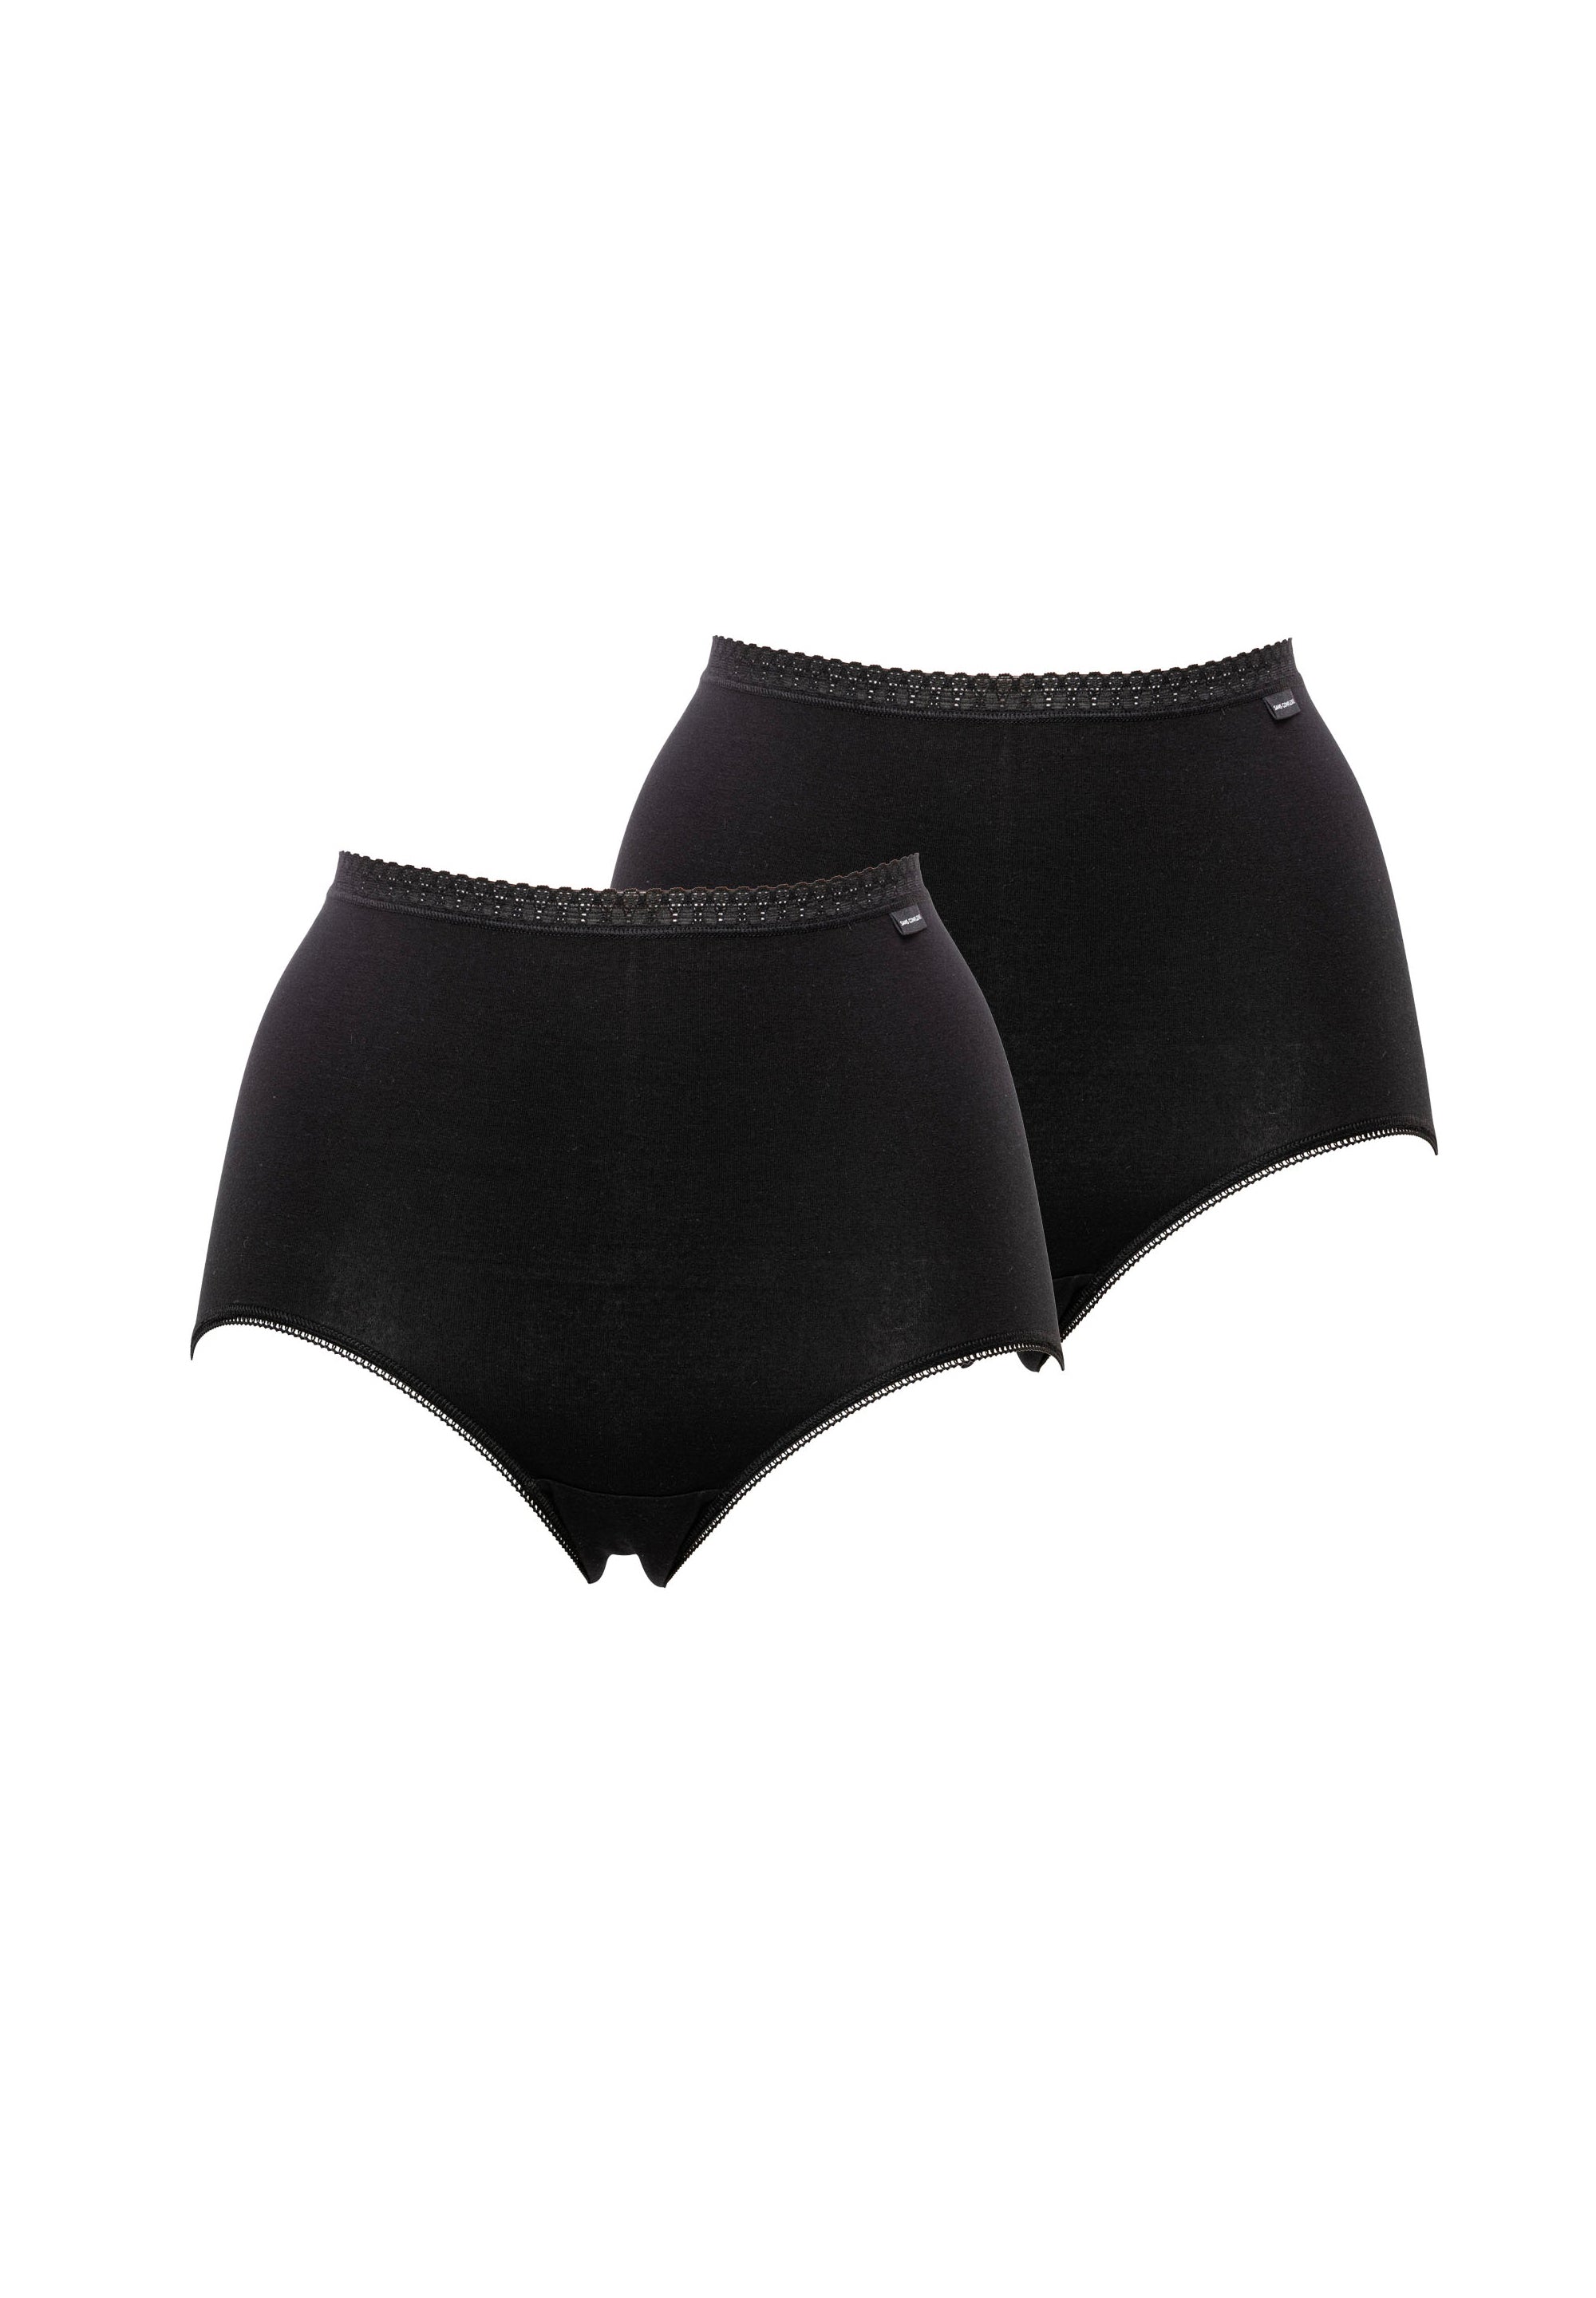 Panties - Pack of 2 Classic Cotton Black